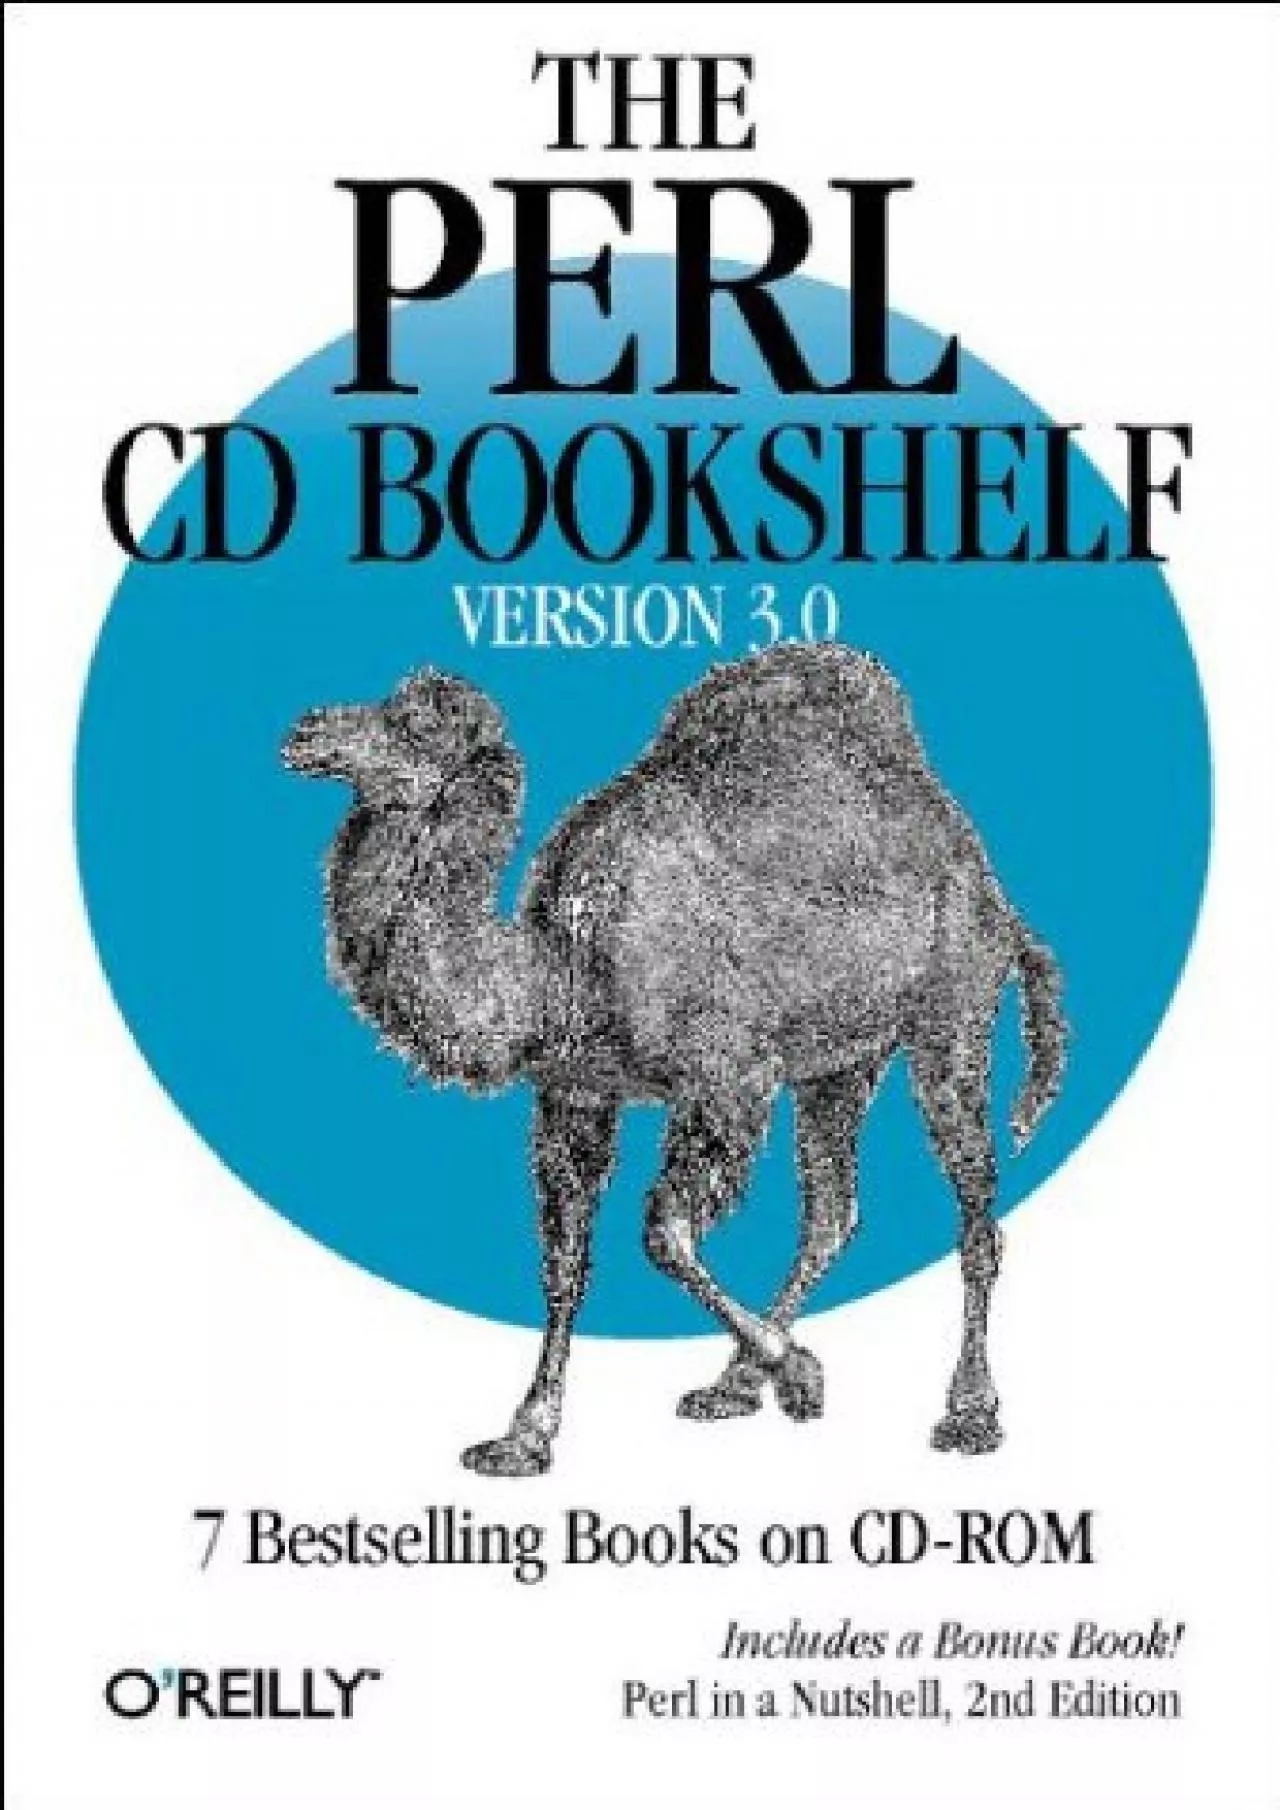 [FREE]-The Perl CD Bookshelf, Version 3.0 7 Bestselling Books on CD-ROM Includes a Bonus